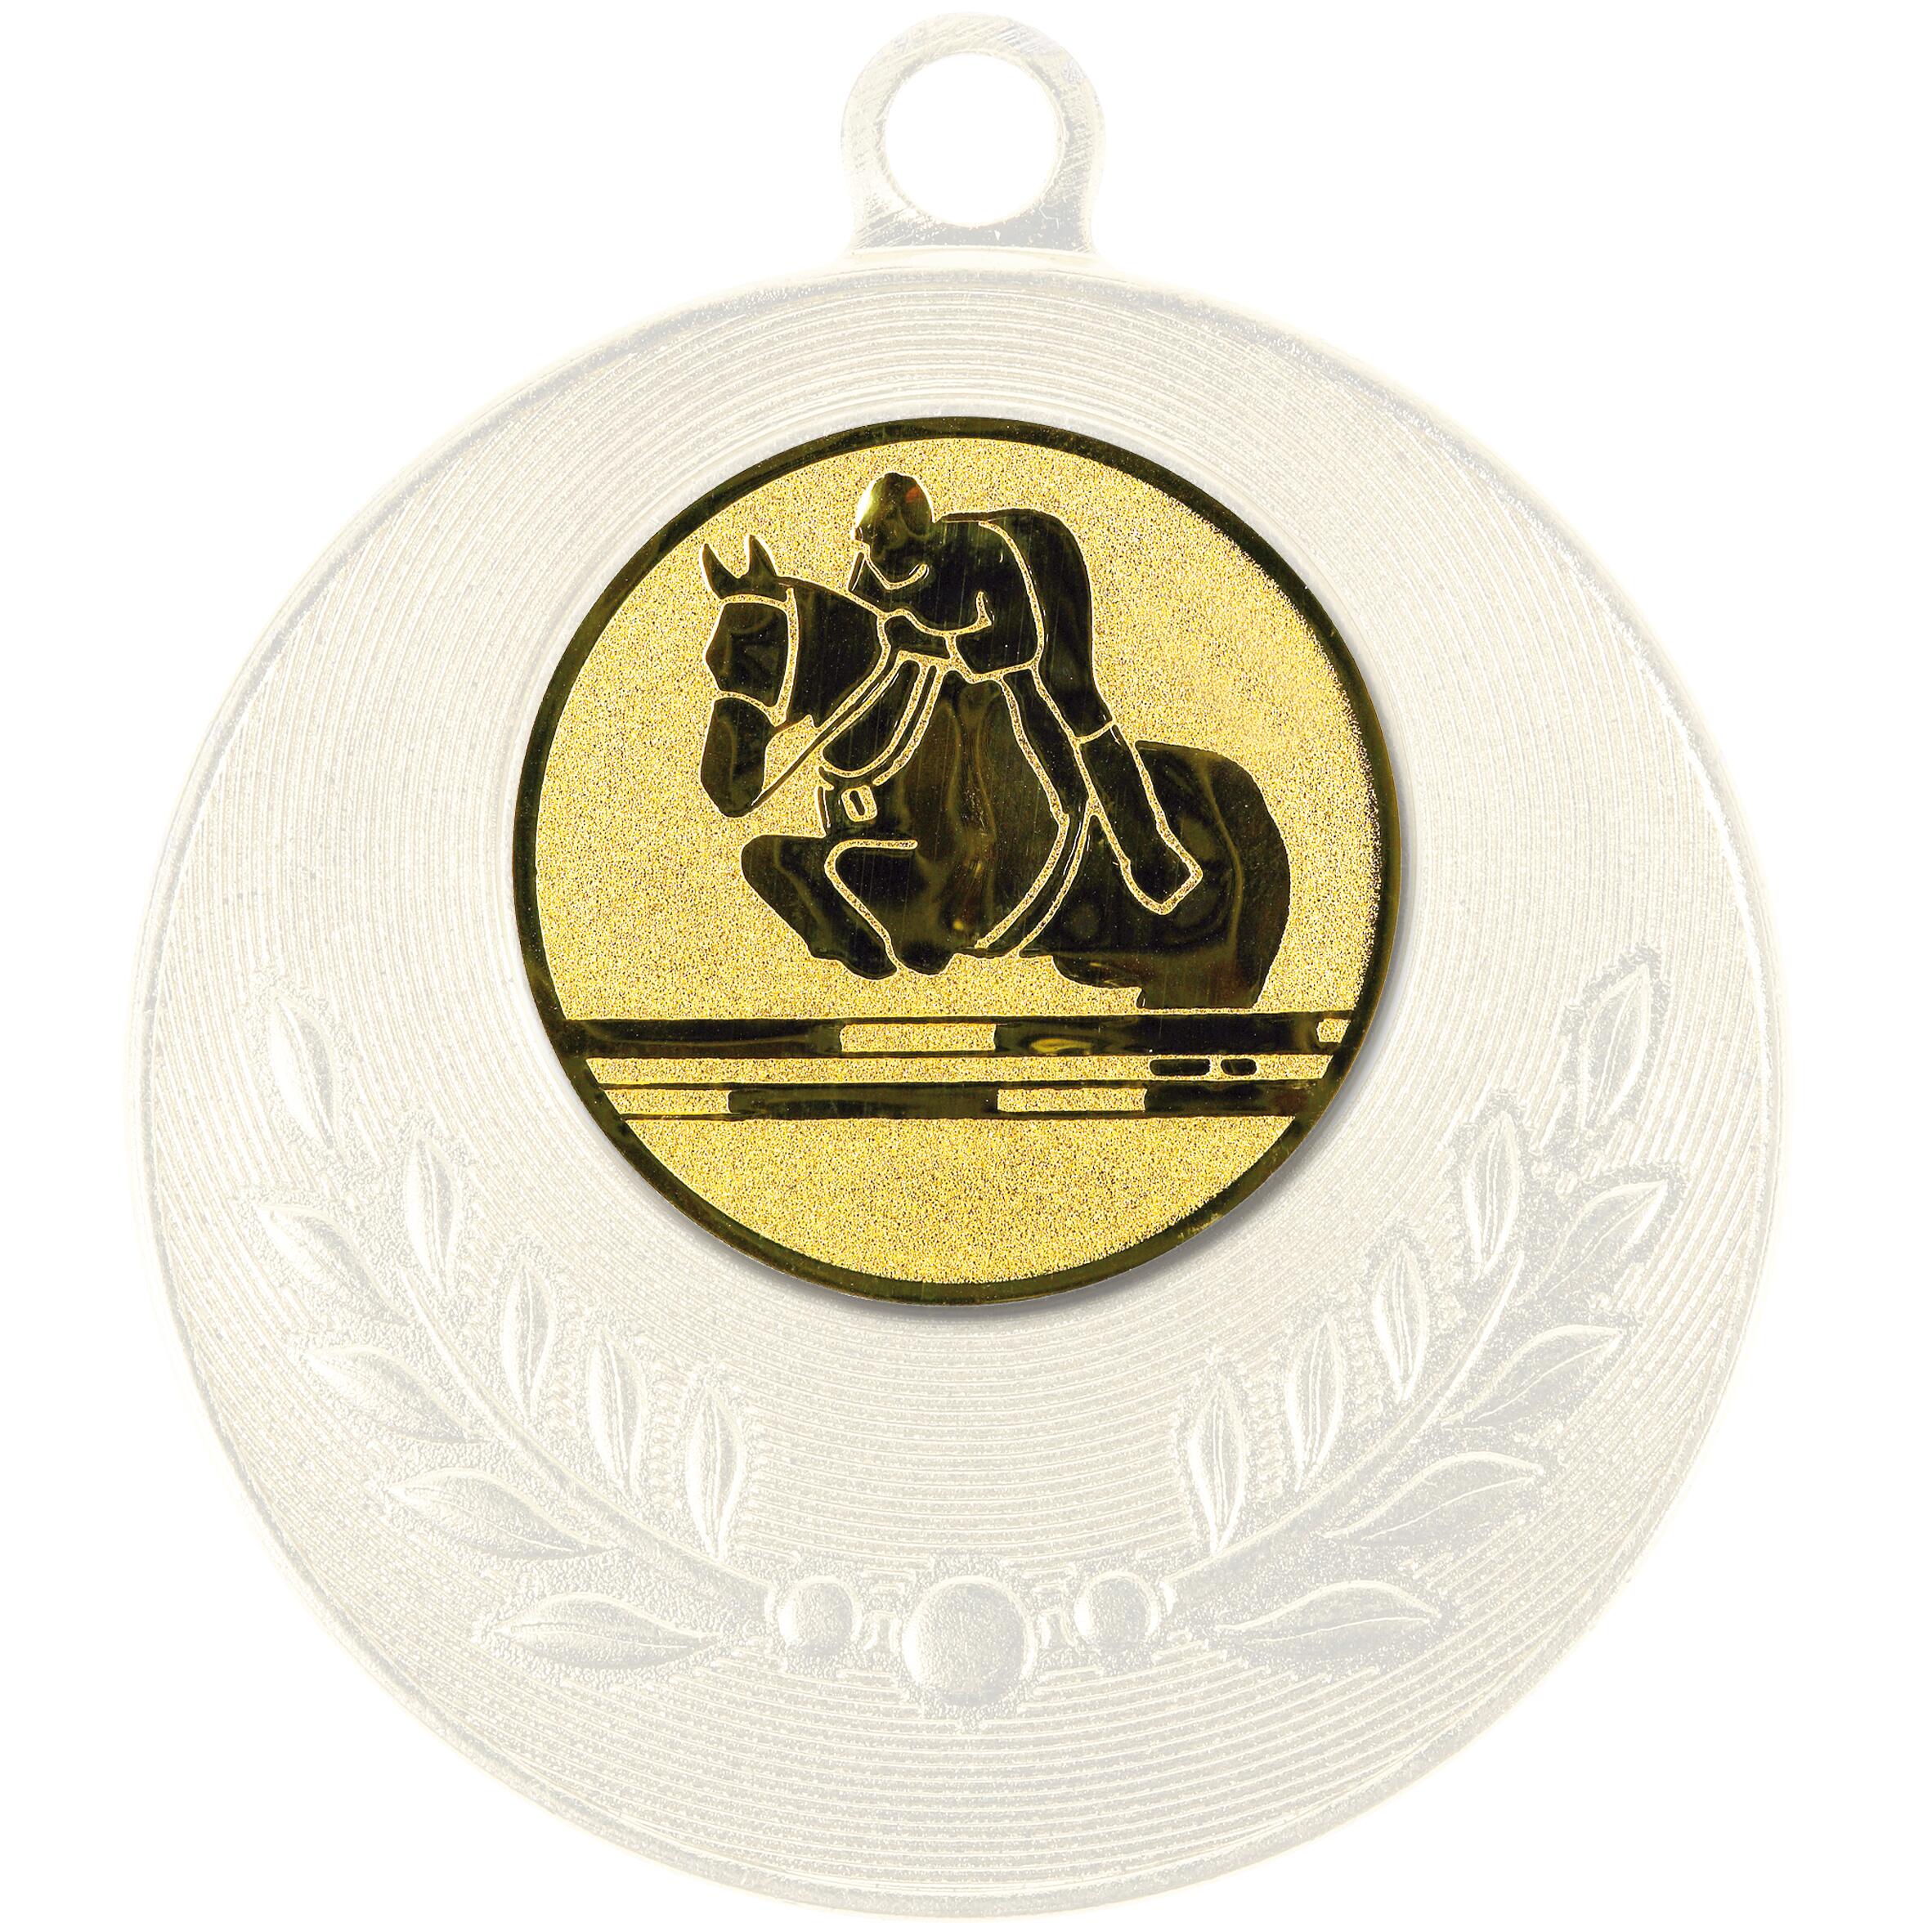 WORKSHOP Sports Award Adhesive "Horse Riding" Sticker